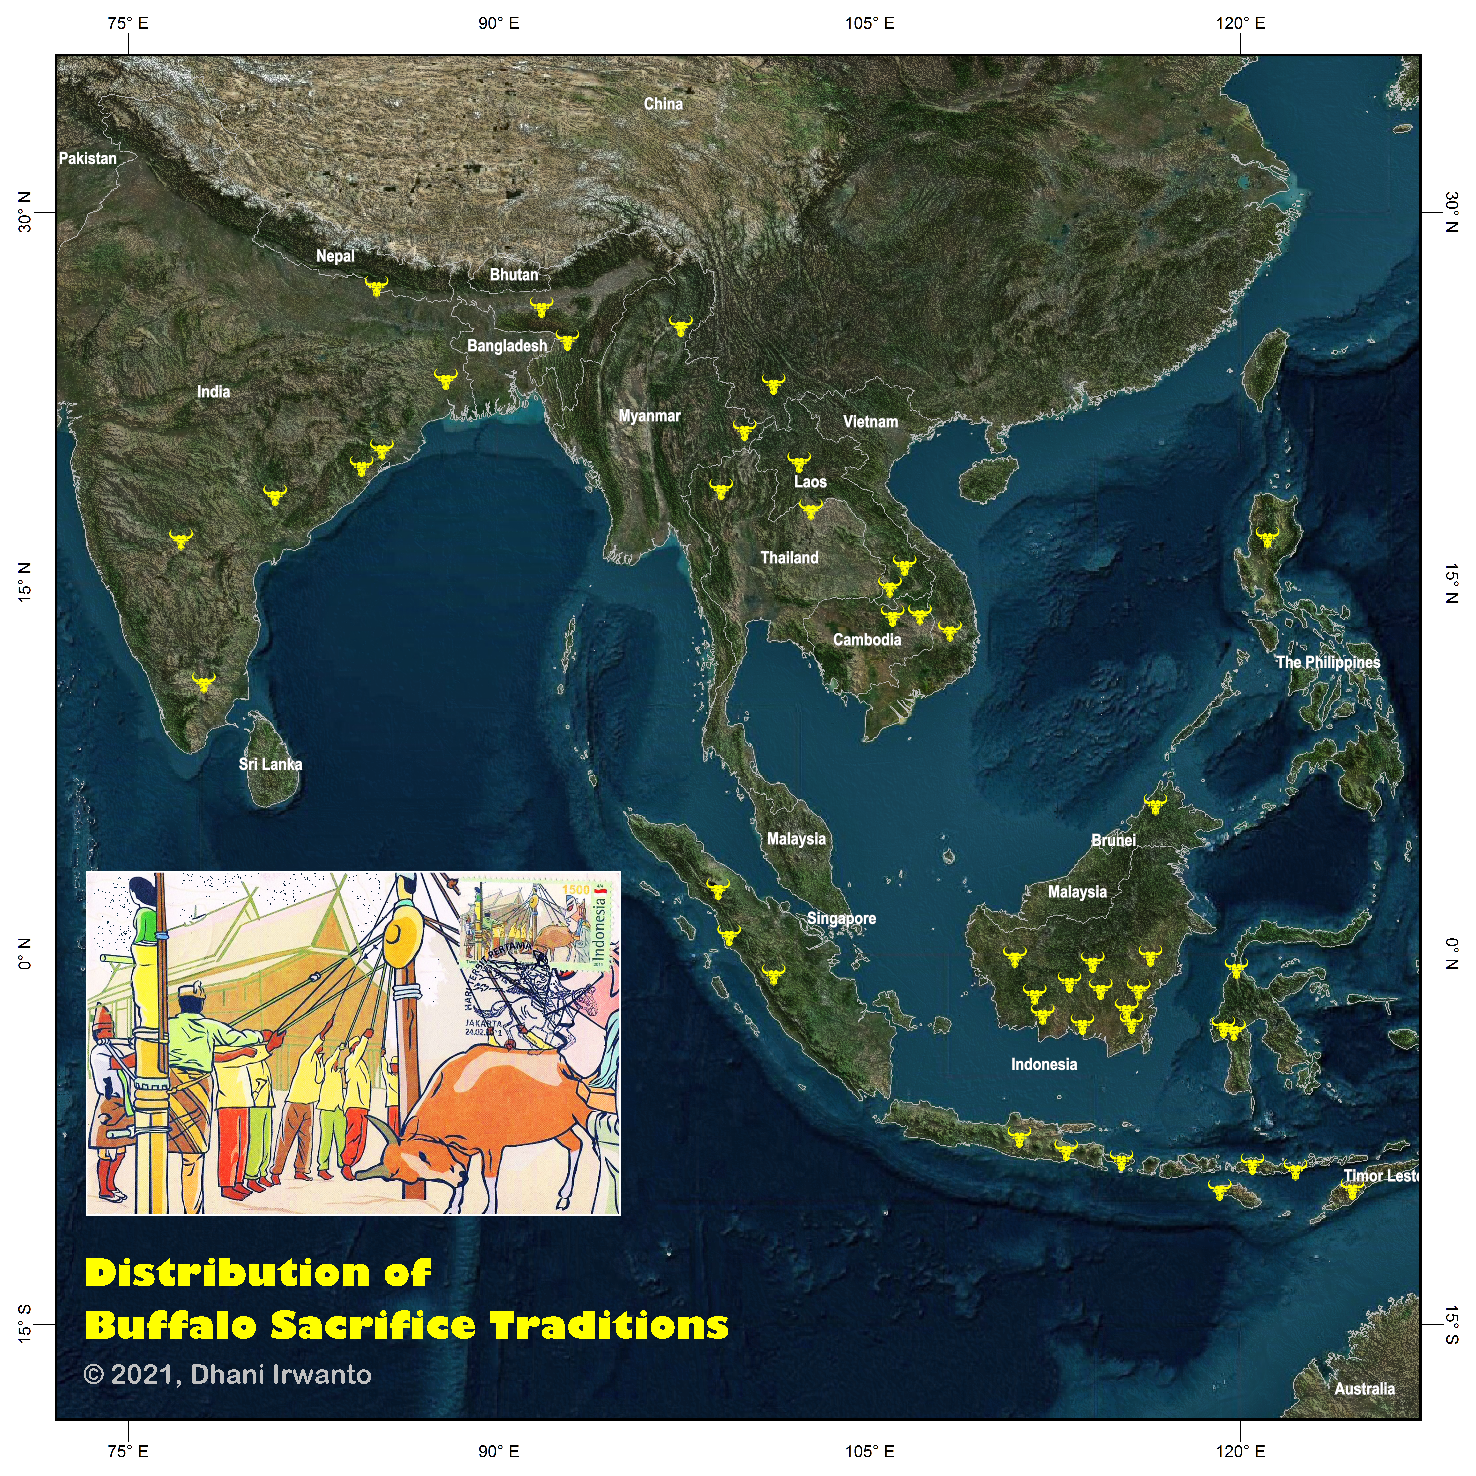 Distribution of Buffalo Sacrifice Traditions 25%